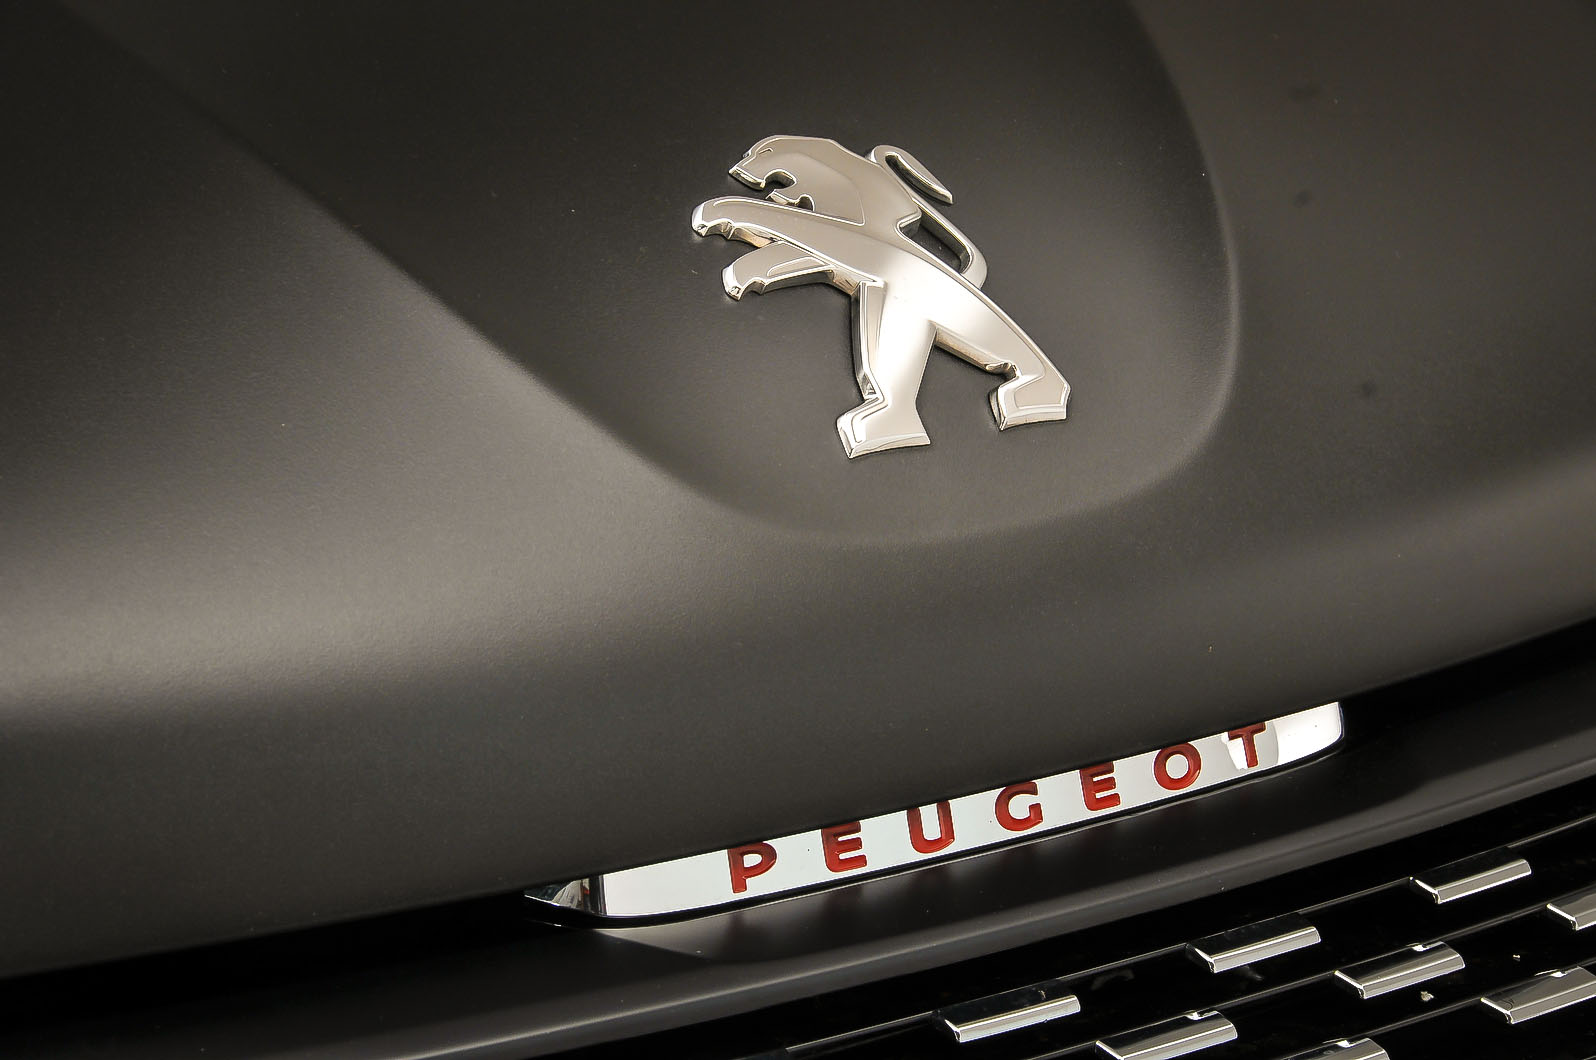 Peugeot badging